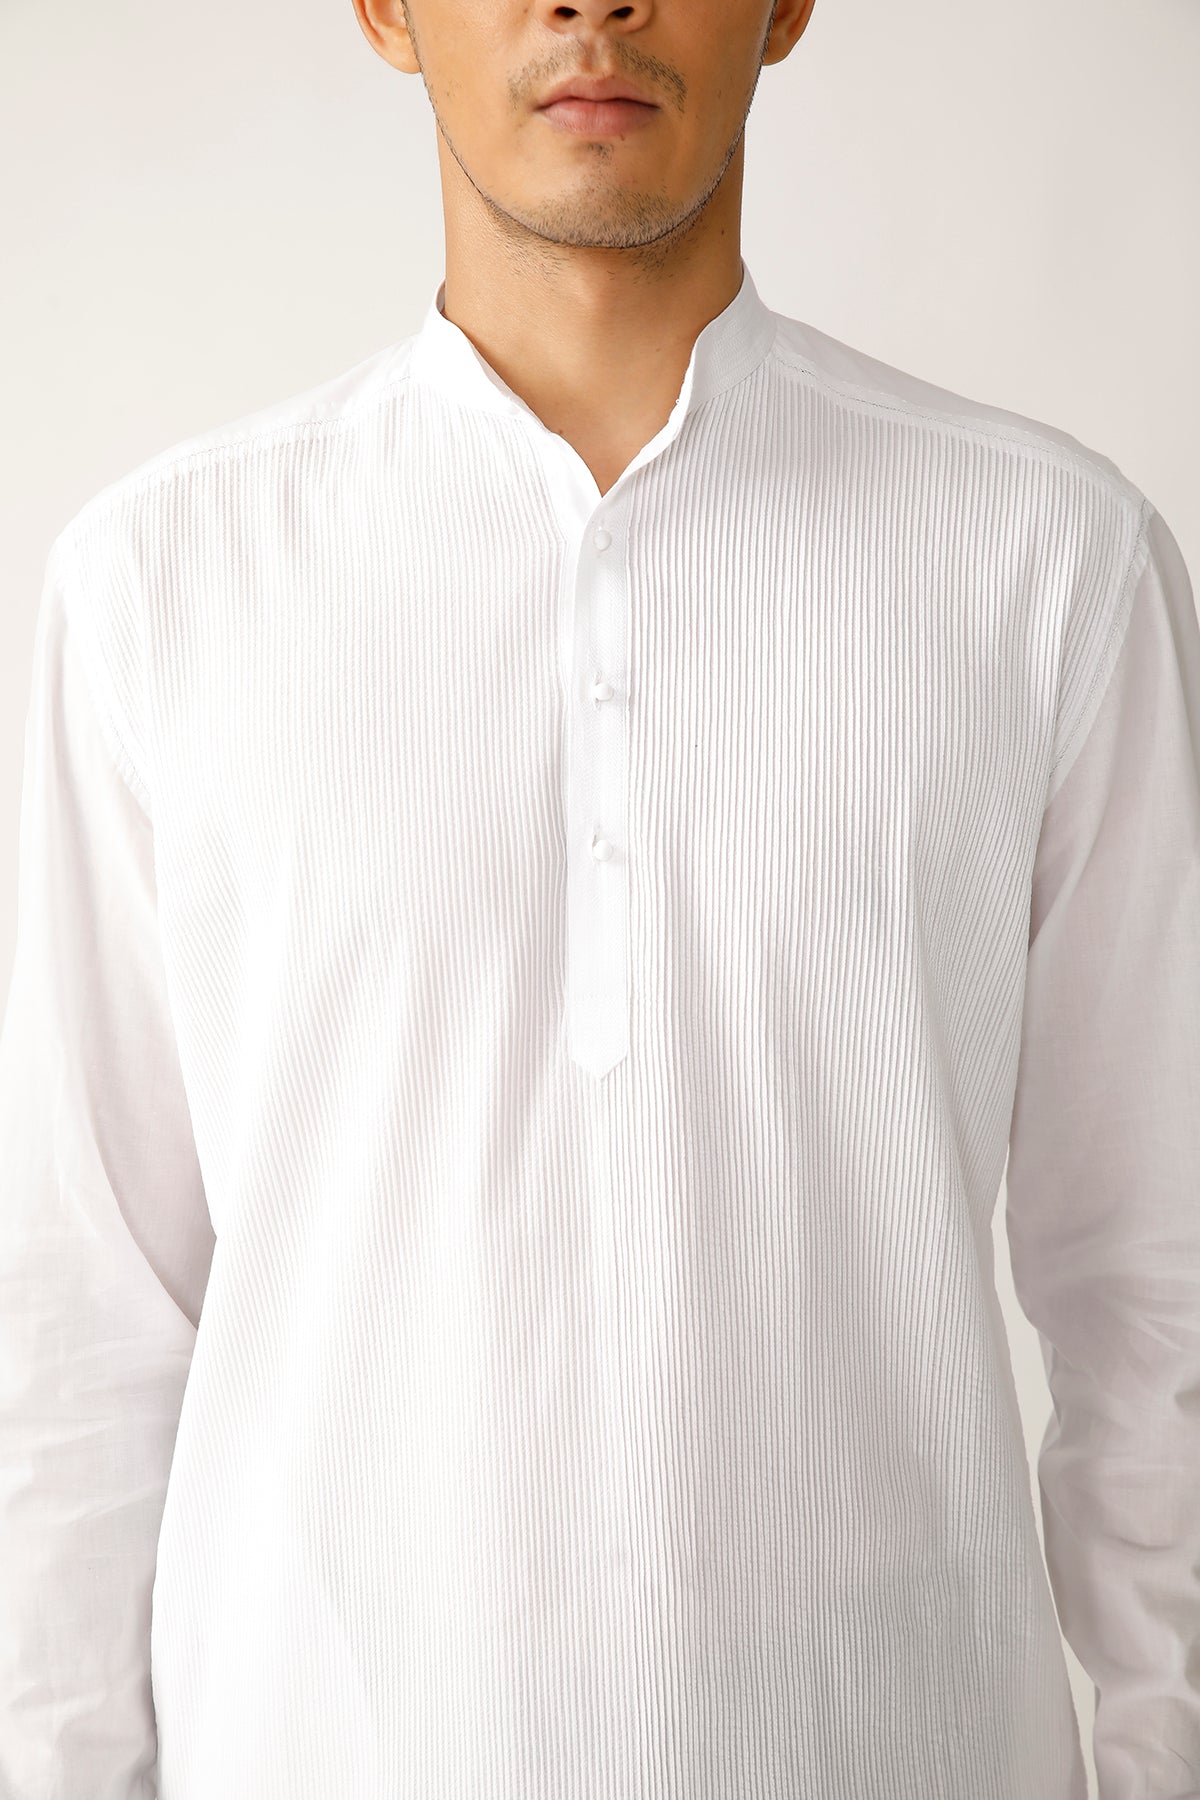 Chandoli Pintuck Shirt